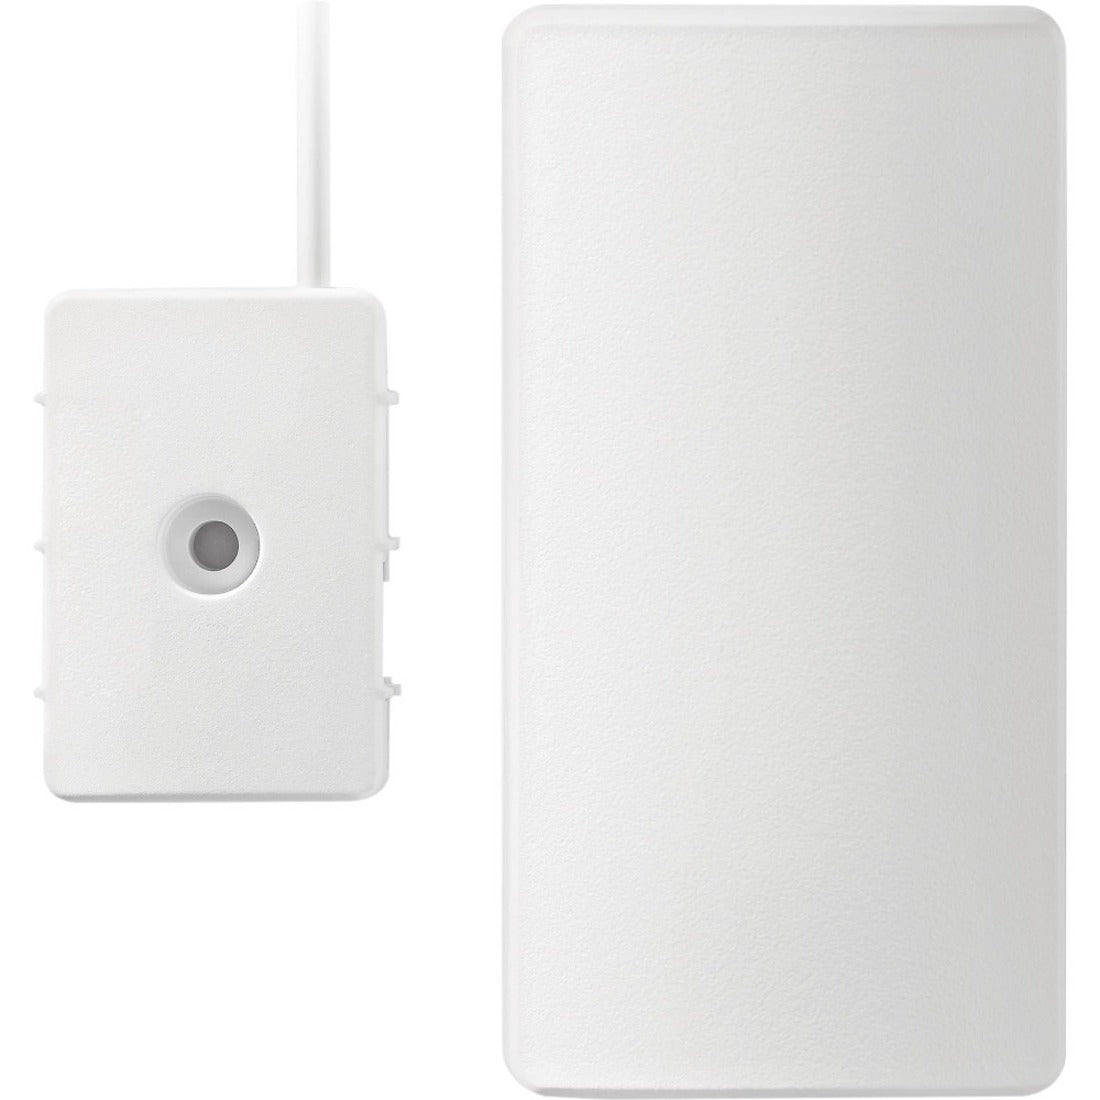 Honeywell Home PROSIXFLOOD Pro Series Wireless Flood Sensor - White, Water Sensing Cable